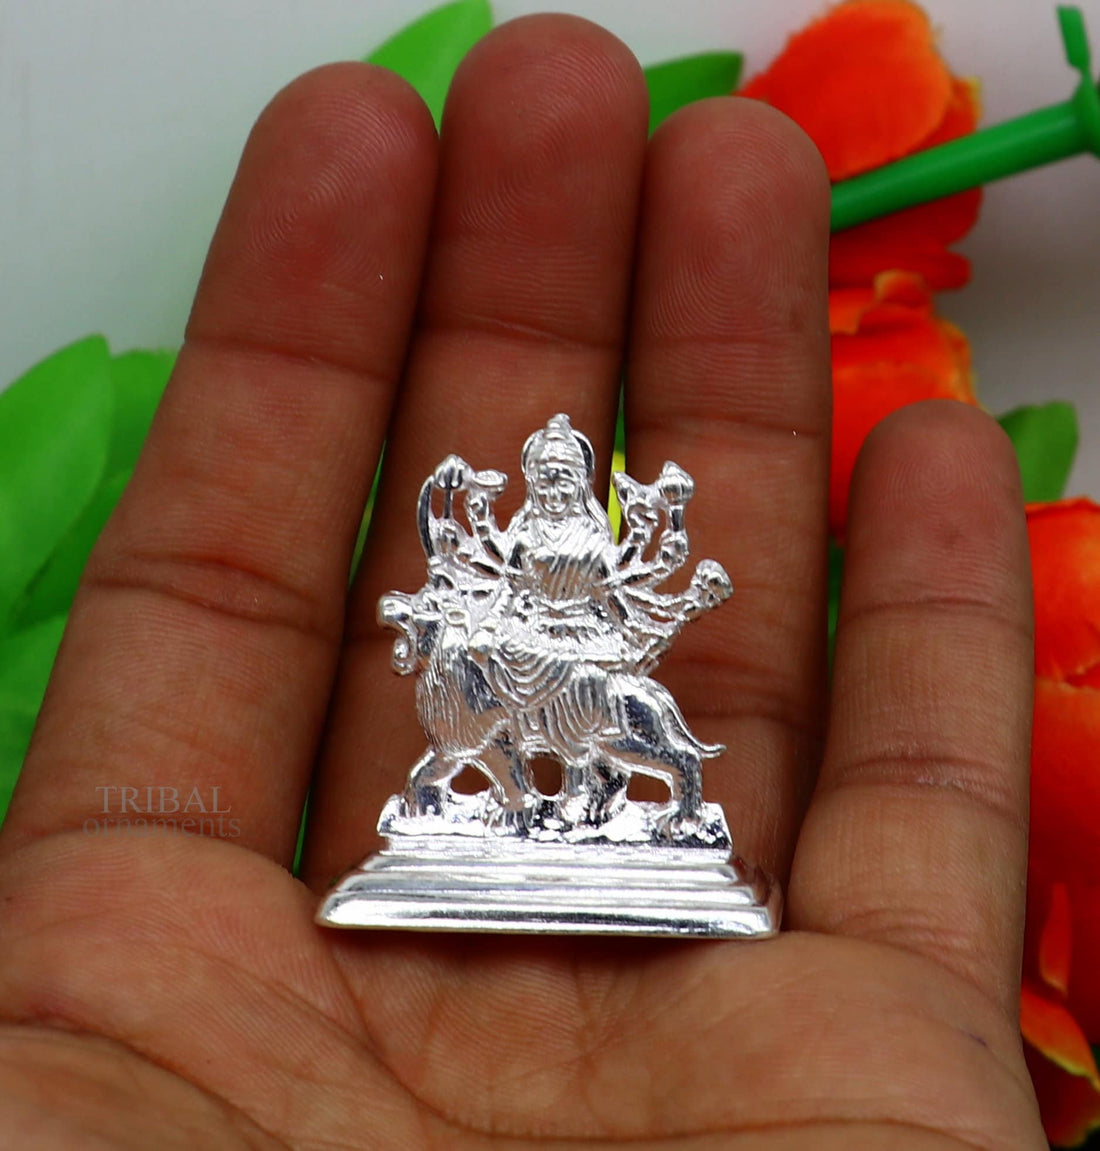 Sterling silver Goddess Durga maa, Pooja Articles, Indian Silver Idols, handcrafted Mataji statue sculpture amazing gifting Art469 - TRIBAL ORNAMENTS